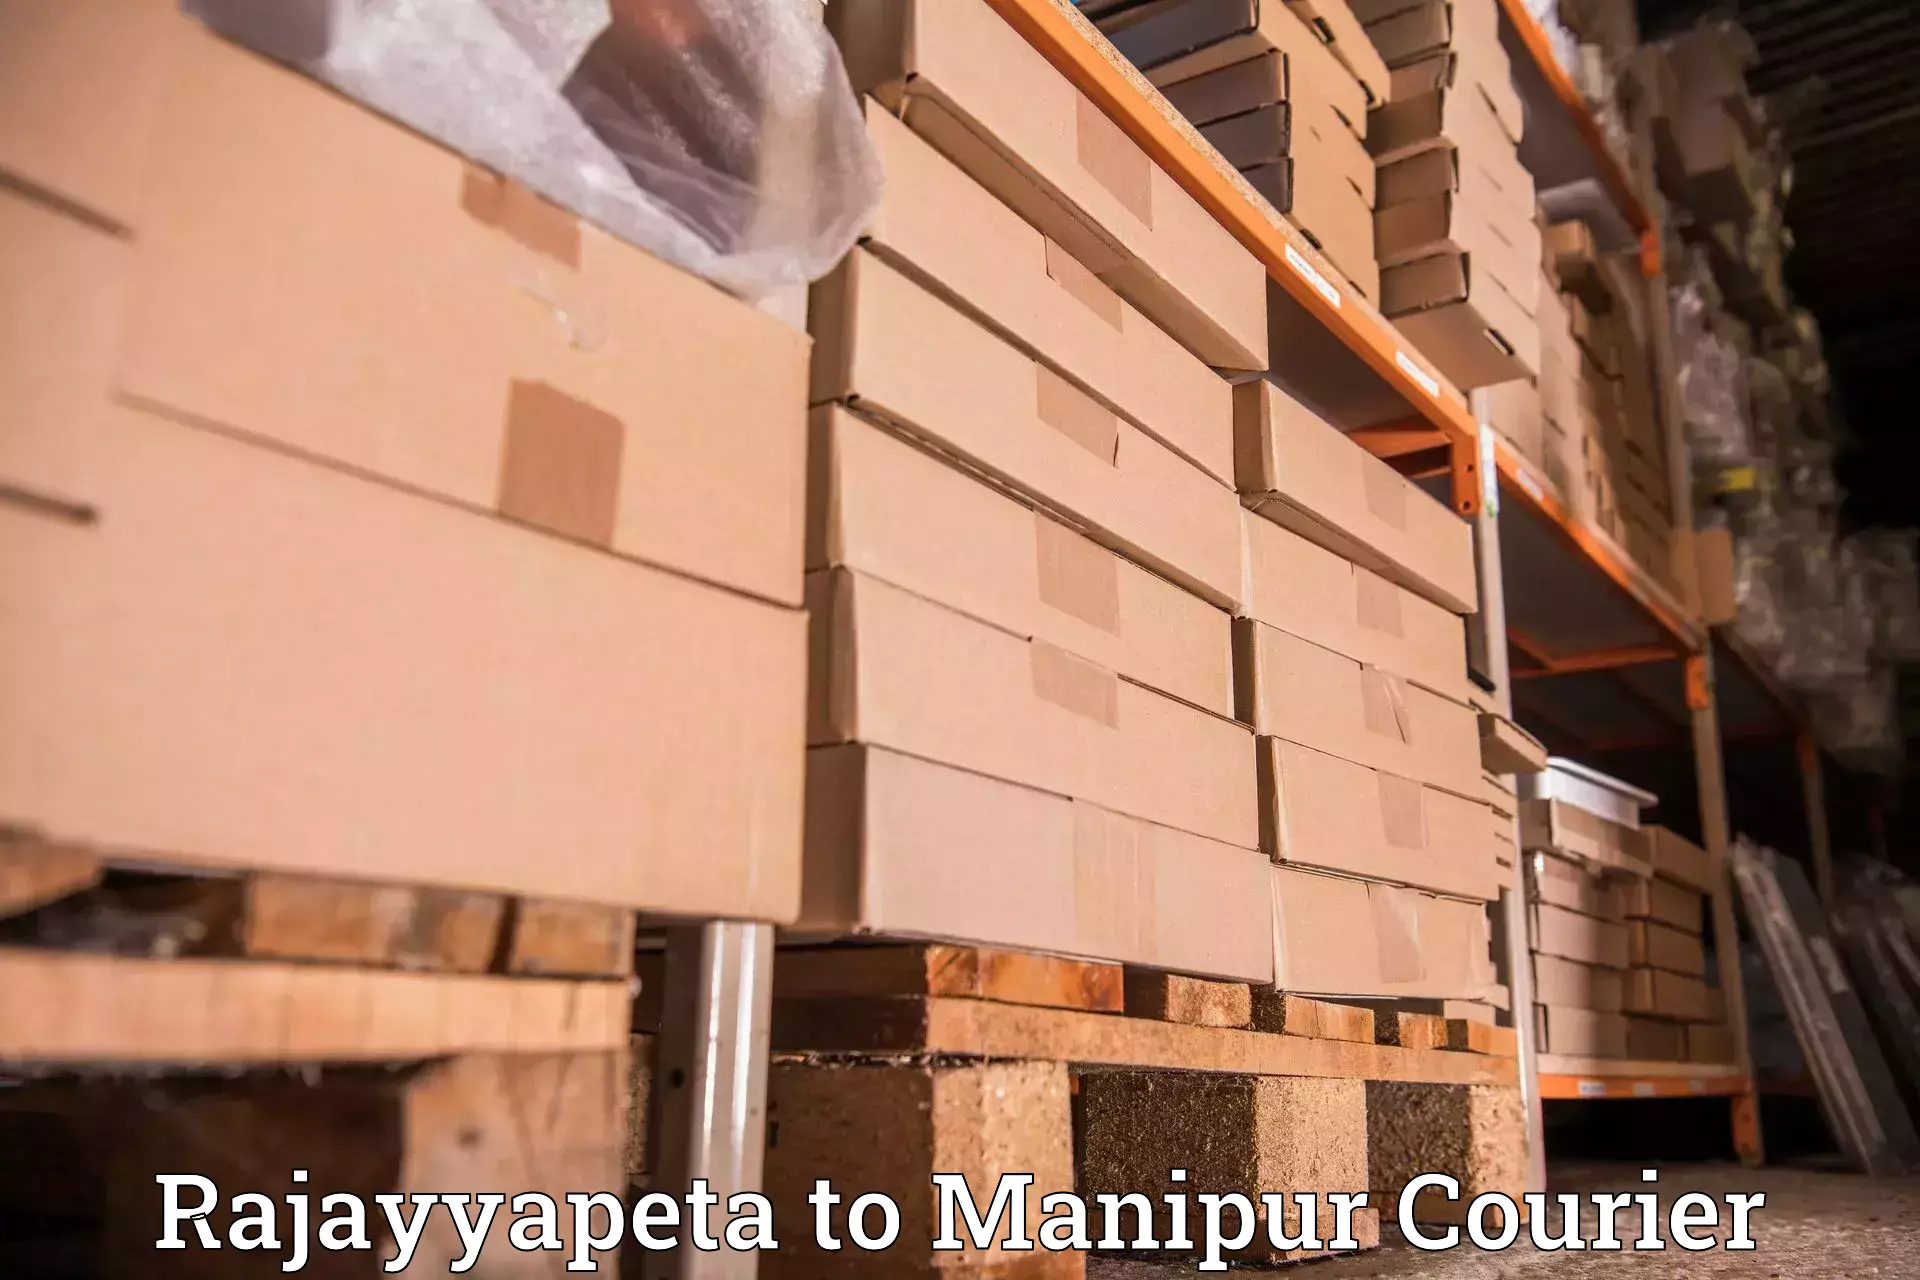 Global logistics network Rajayyapeta to Manipur